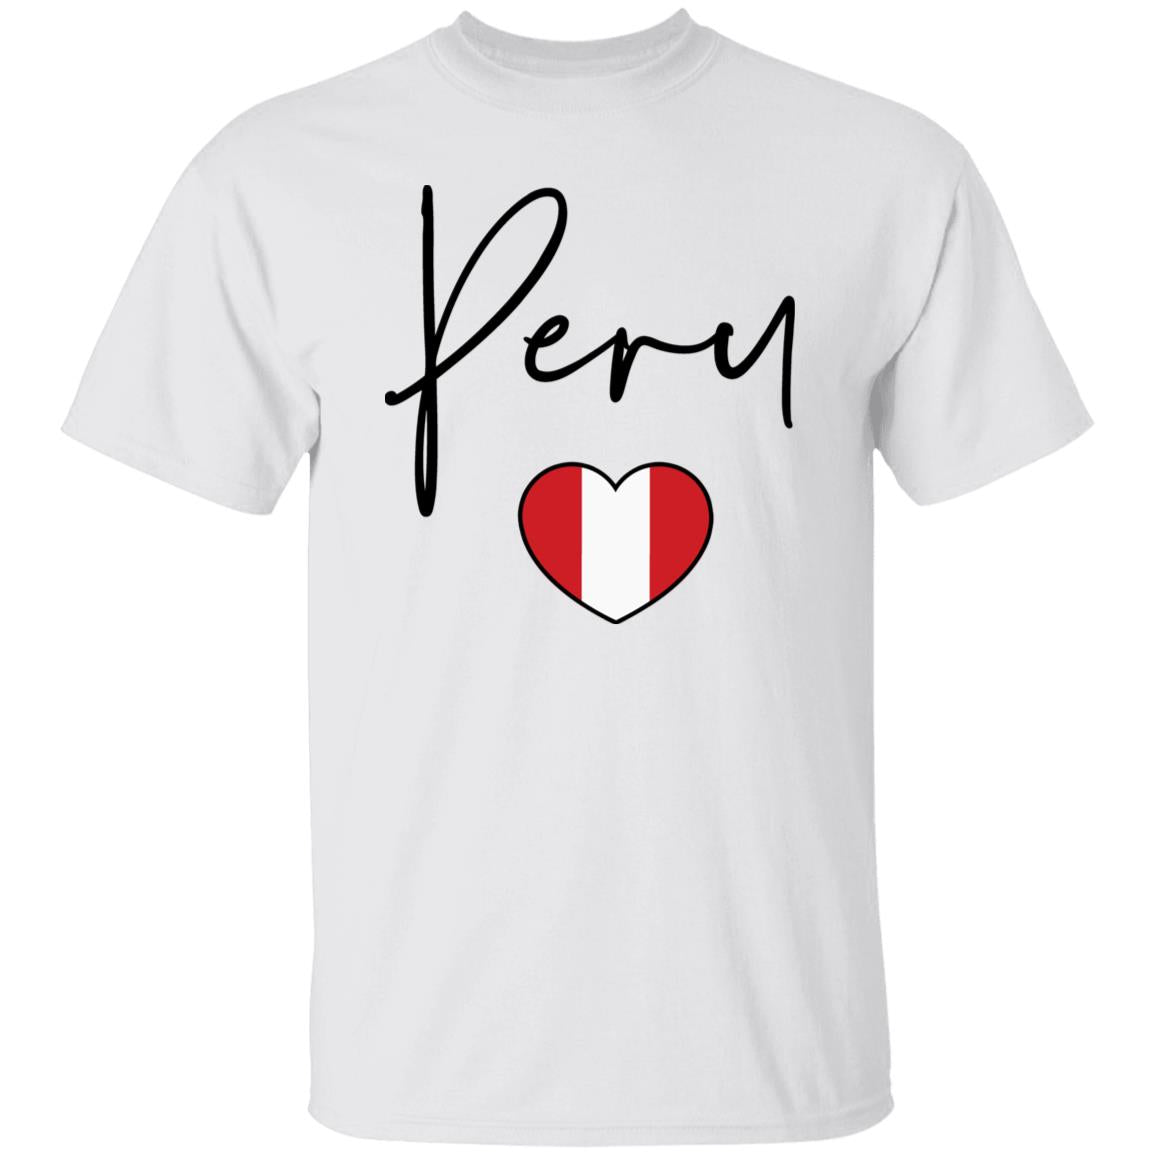 Peru flag heart Unisex T-shirt Peru love tee White Sand Blue-White-Family-Gift-Planet